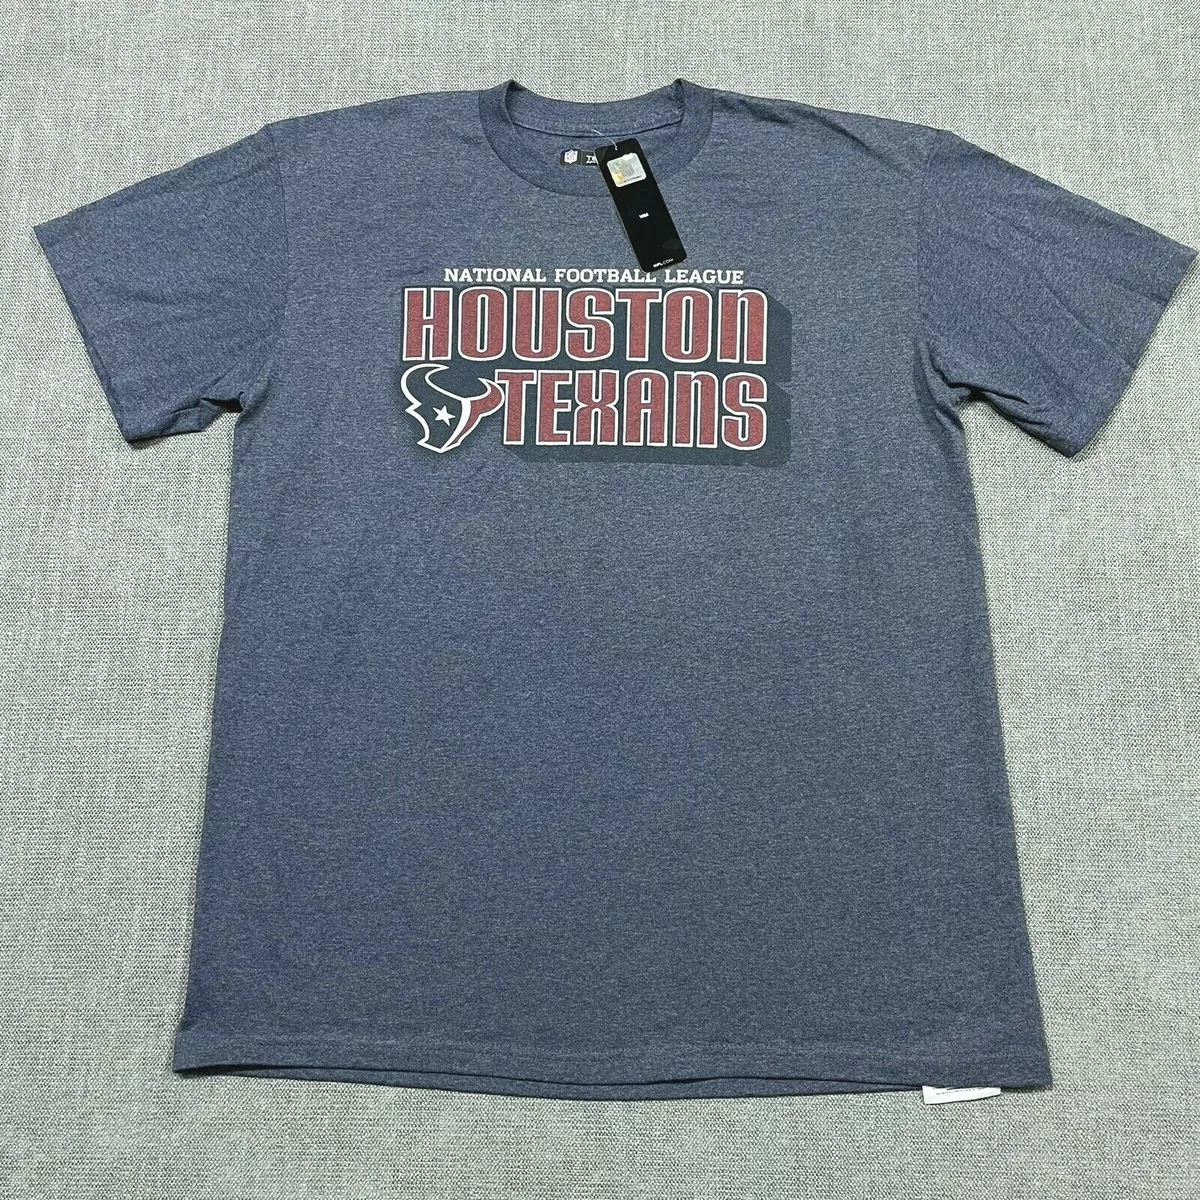 Houston Texans Mens Large Shirt Spellout Tee Shirt Sleeve NFL Team Shop NWT